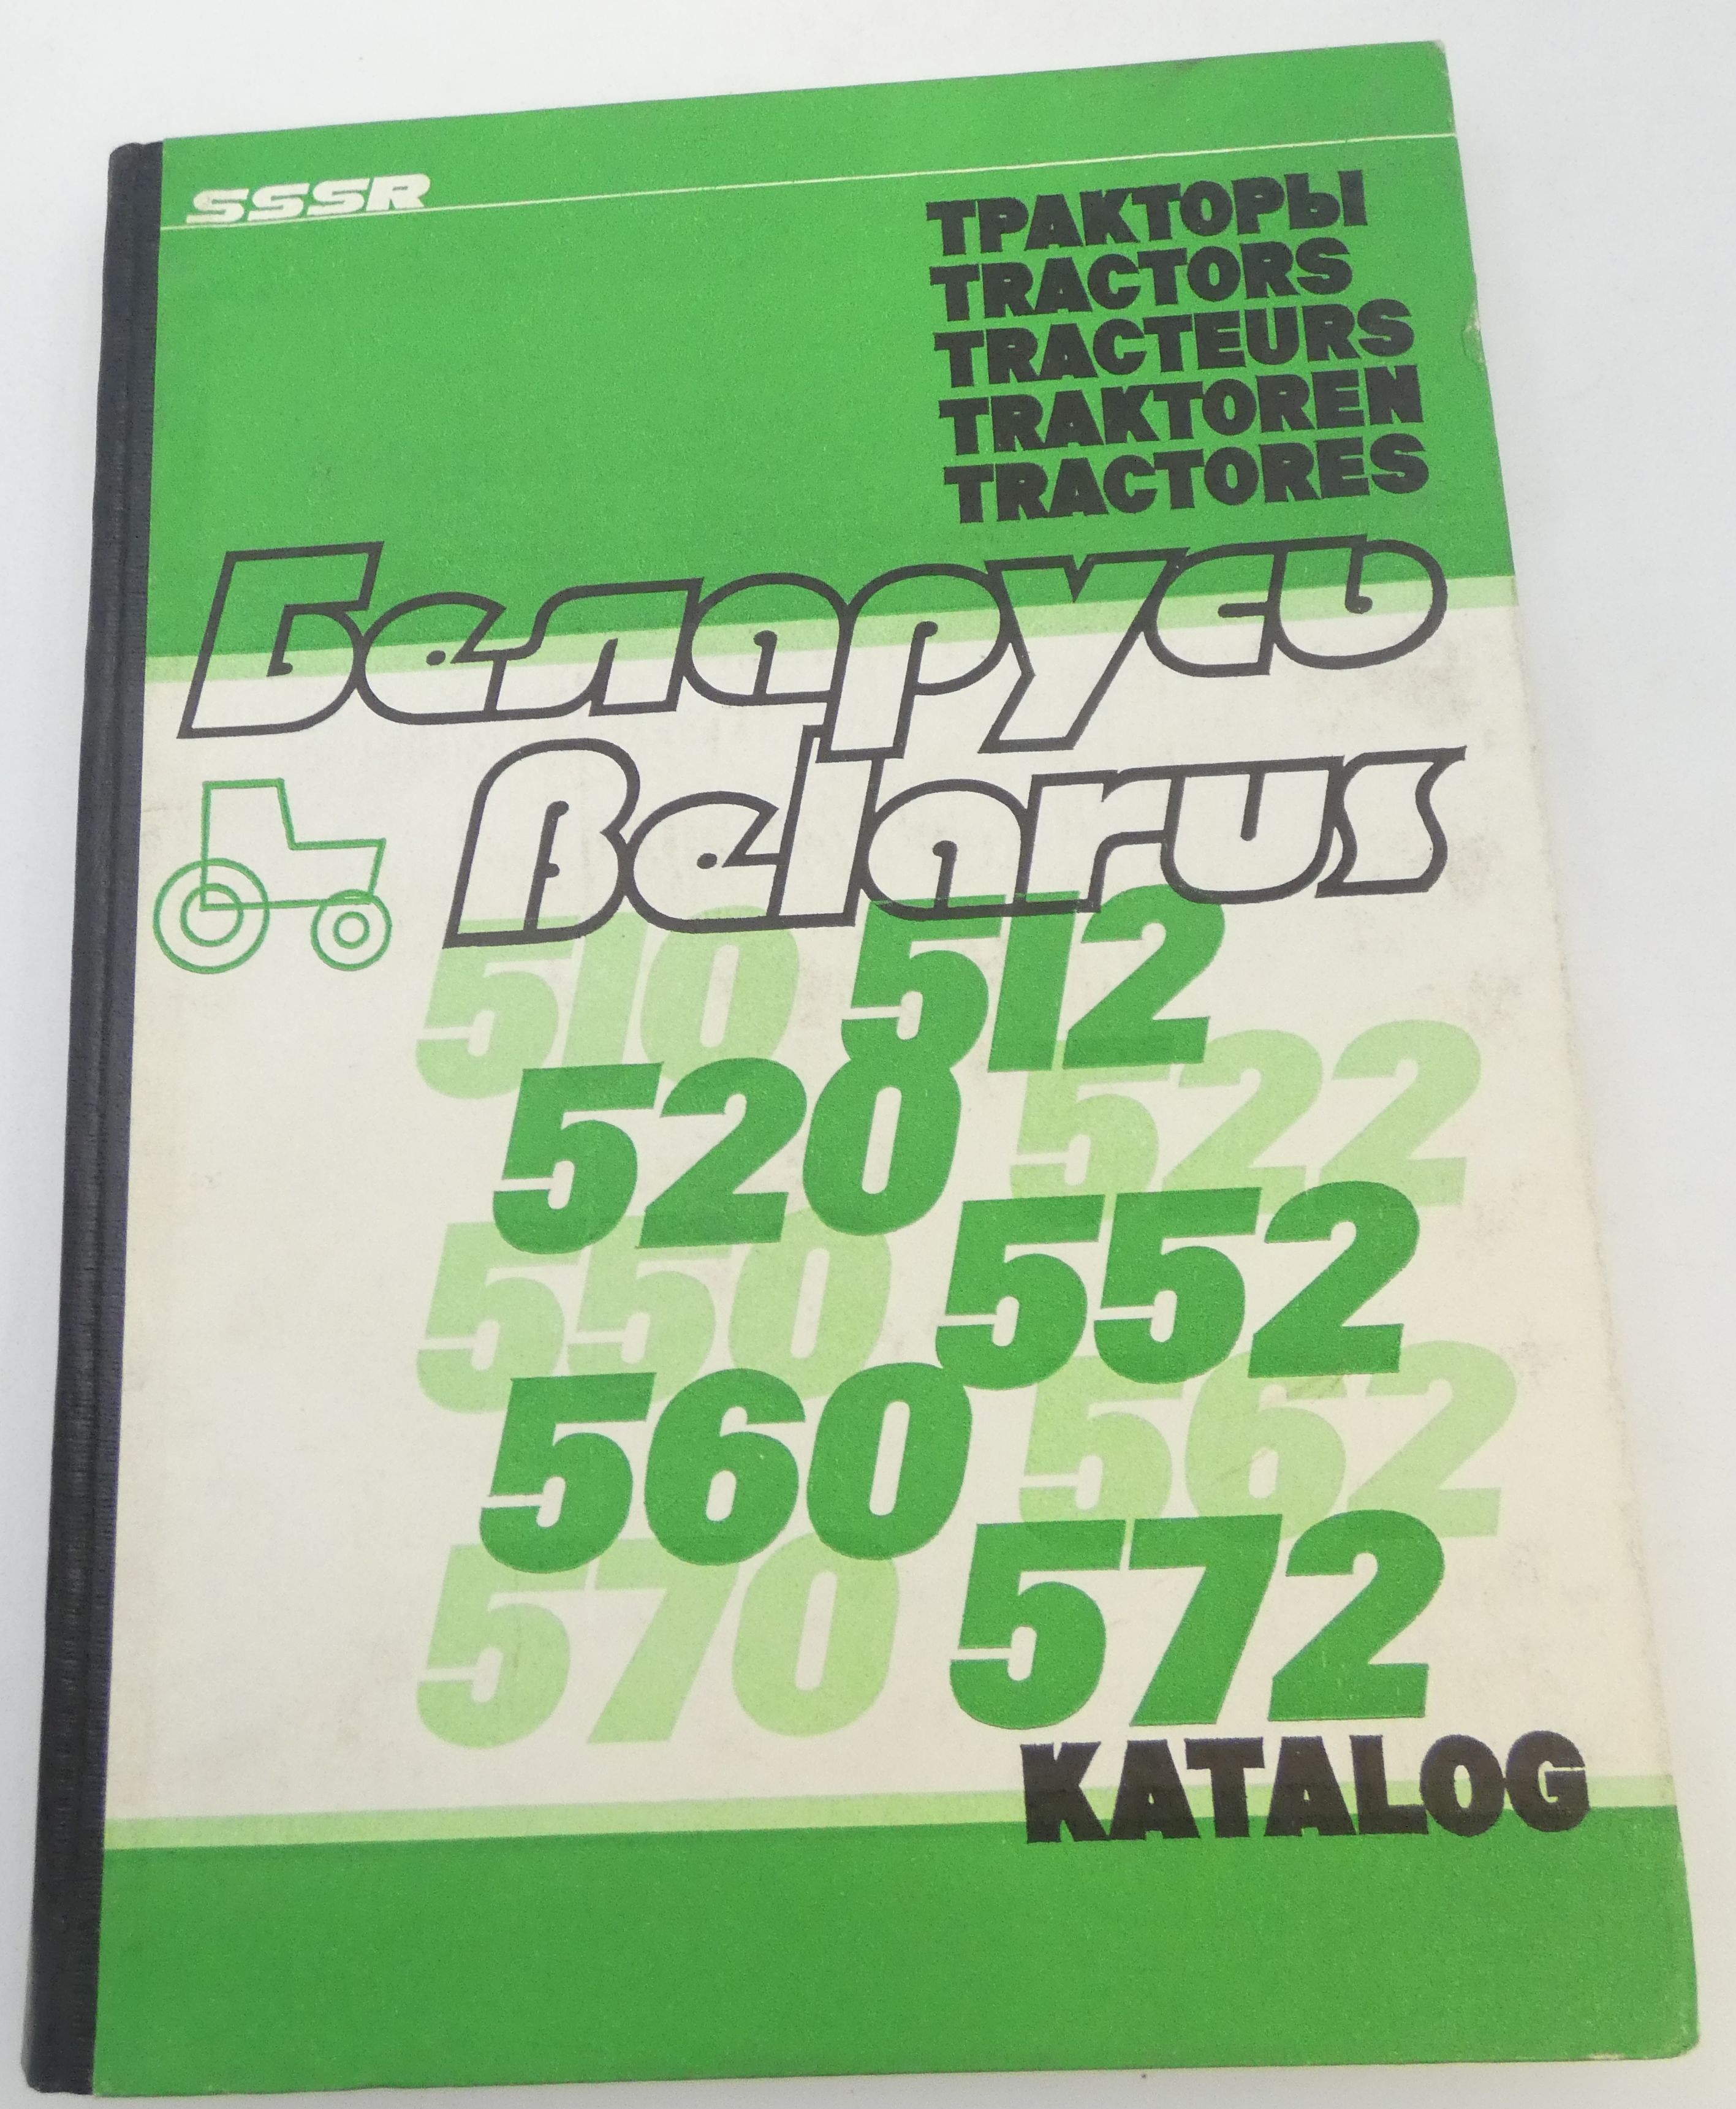 Belarus 510, 512, 520, 522, 550, 552, 560, 562, 570, 572 catalogue